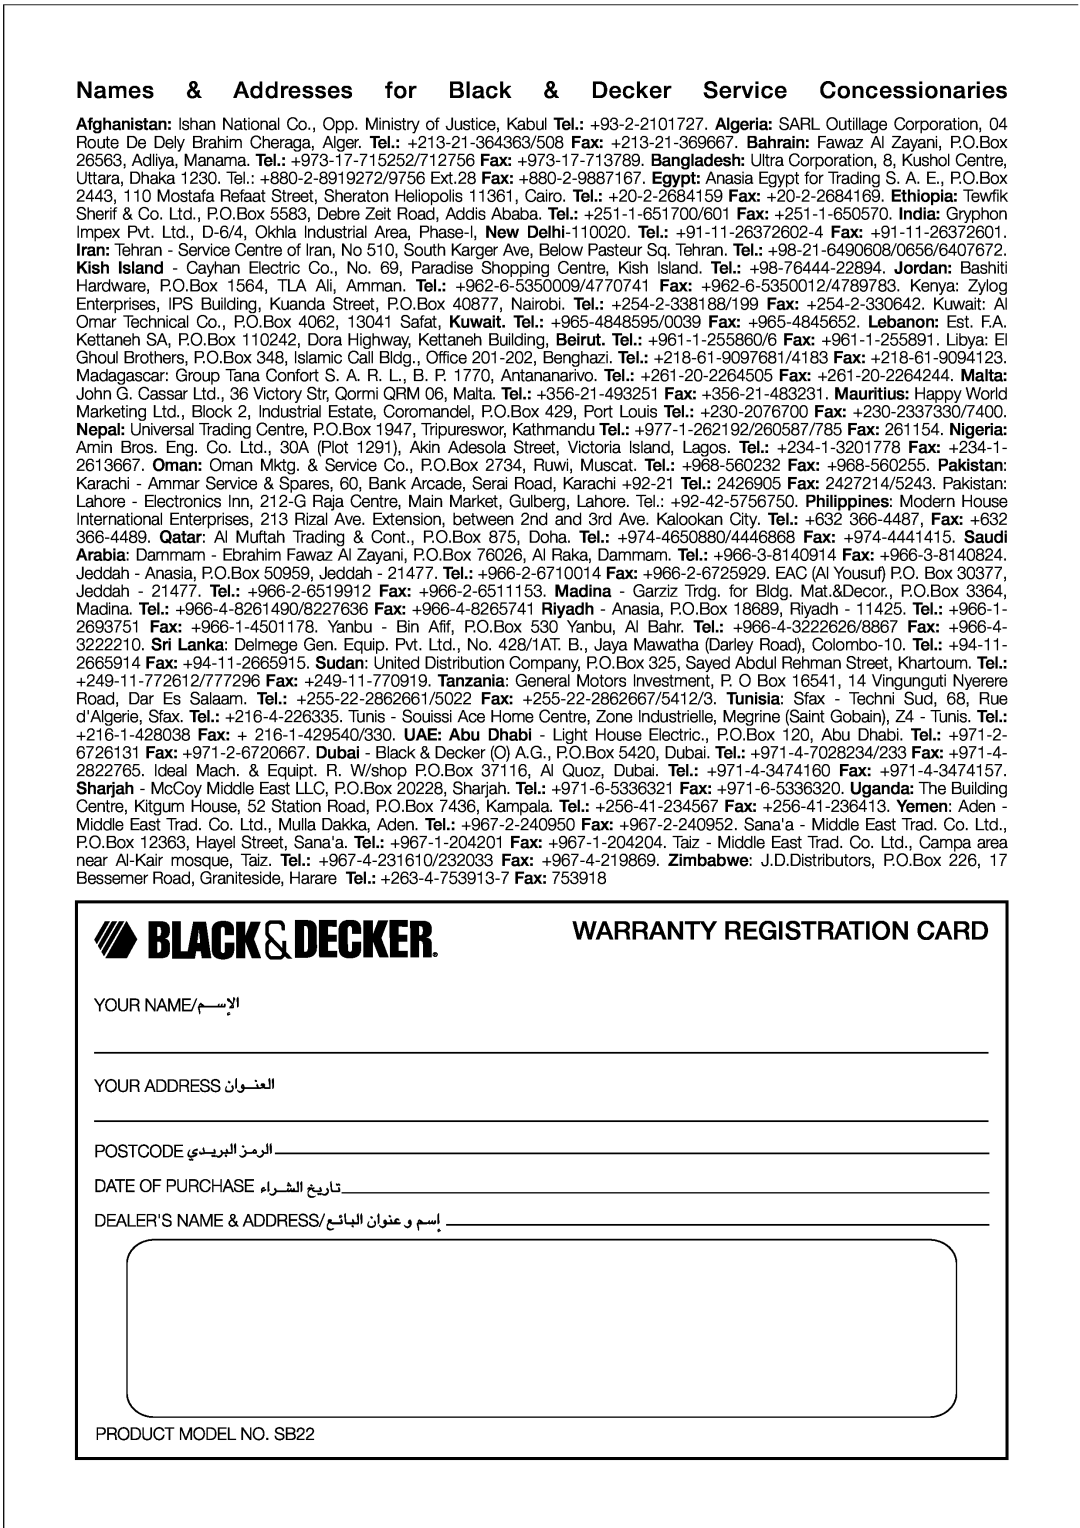 Black & Decker SB22 manual Warranty Registration Card 